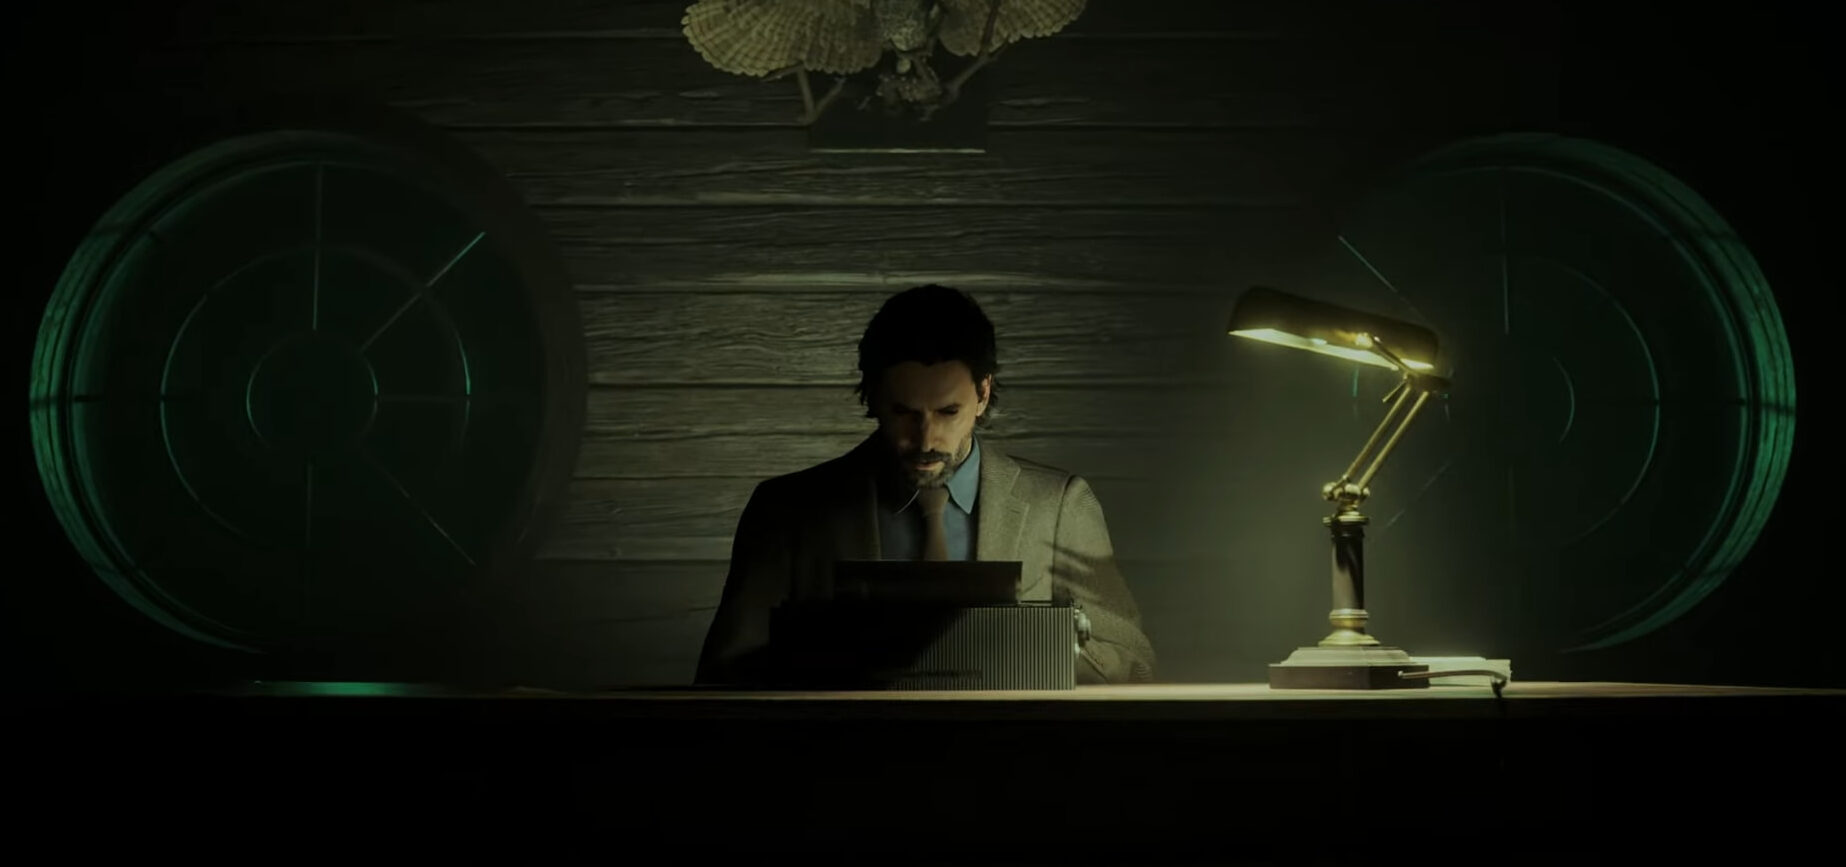 Alan Wake 2 recebe data de lançamento para 17 de outubro; pré